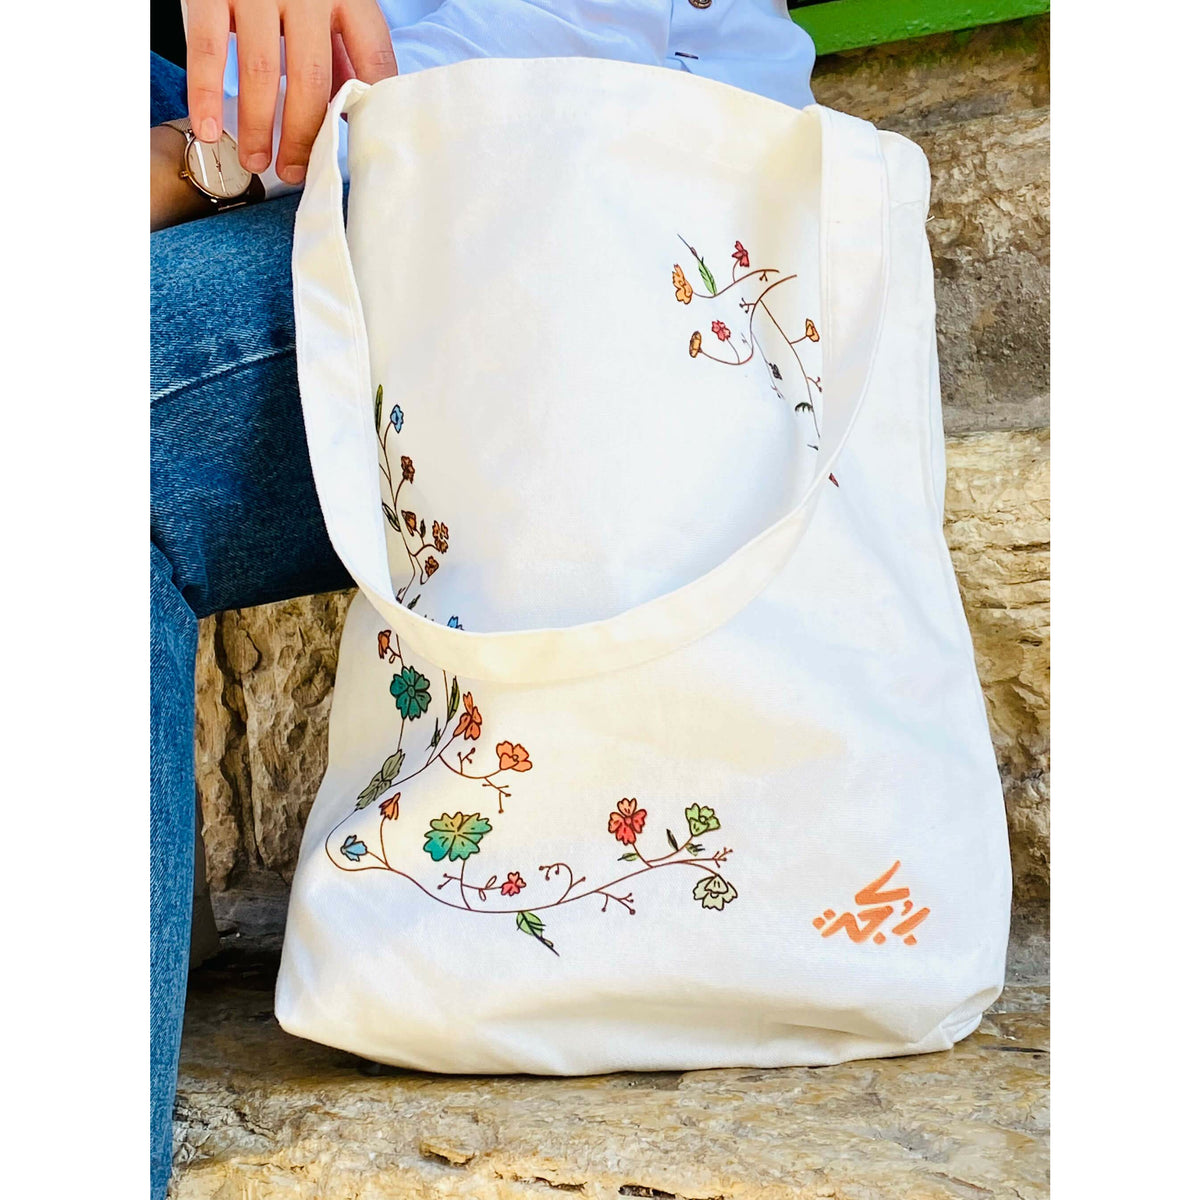 Vintage Flowers White Tote Bag